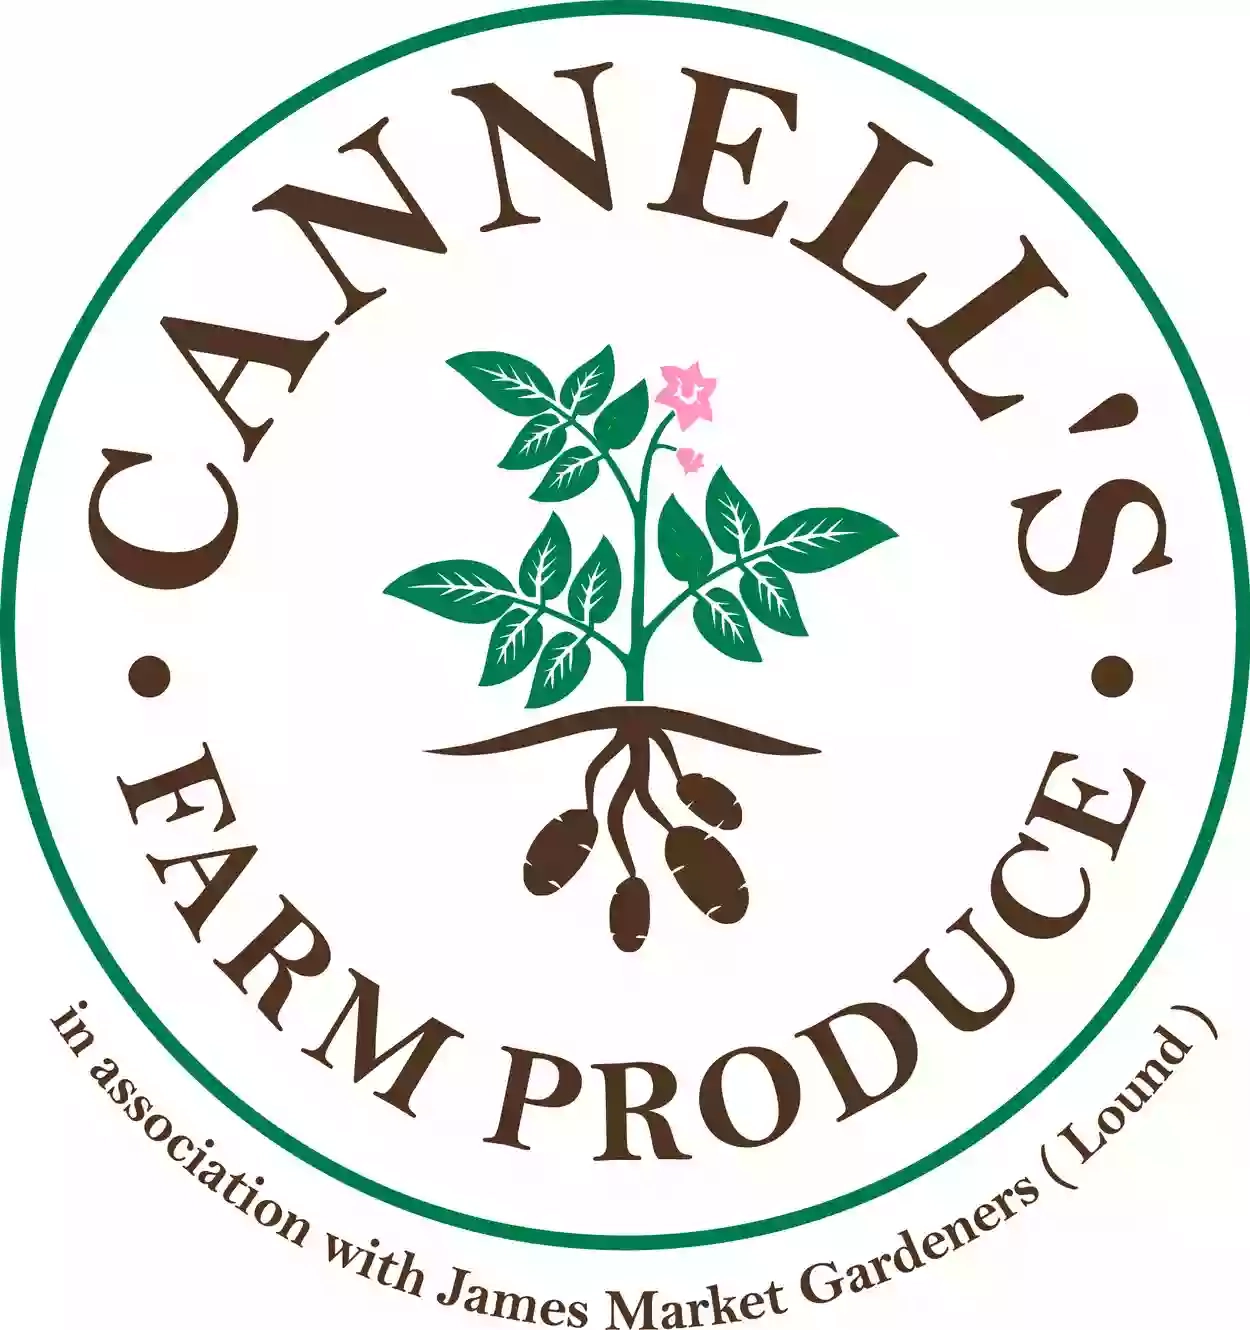 CANNELL'S FARM PRODUCE